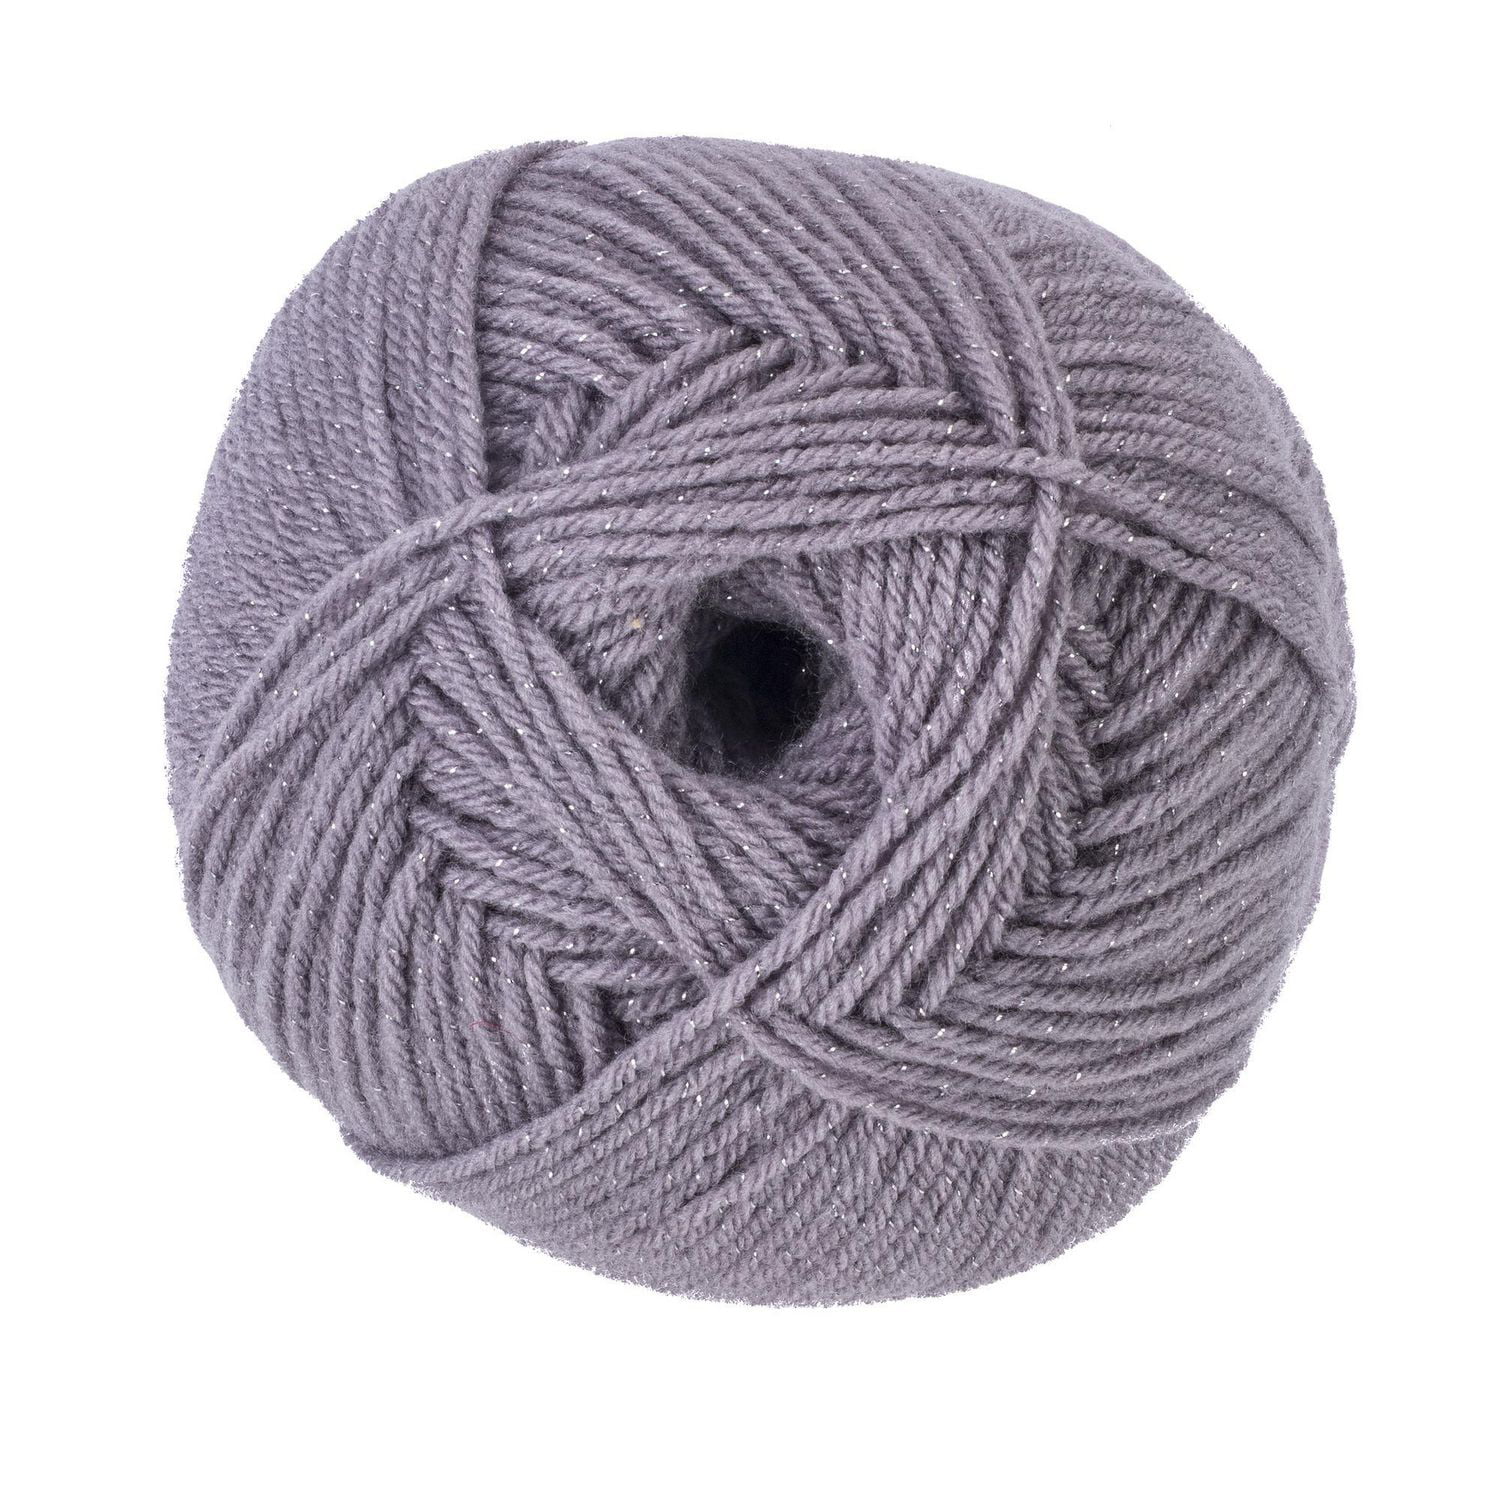 Red Heart® Comfort® Yarn, Shimmer, Acrylic #4 Medium, 12oz/340g, 649 Yards,  Versatile yarn large ball size 